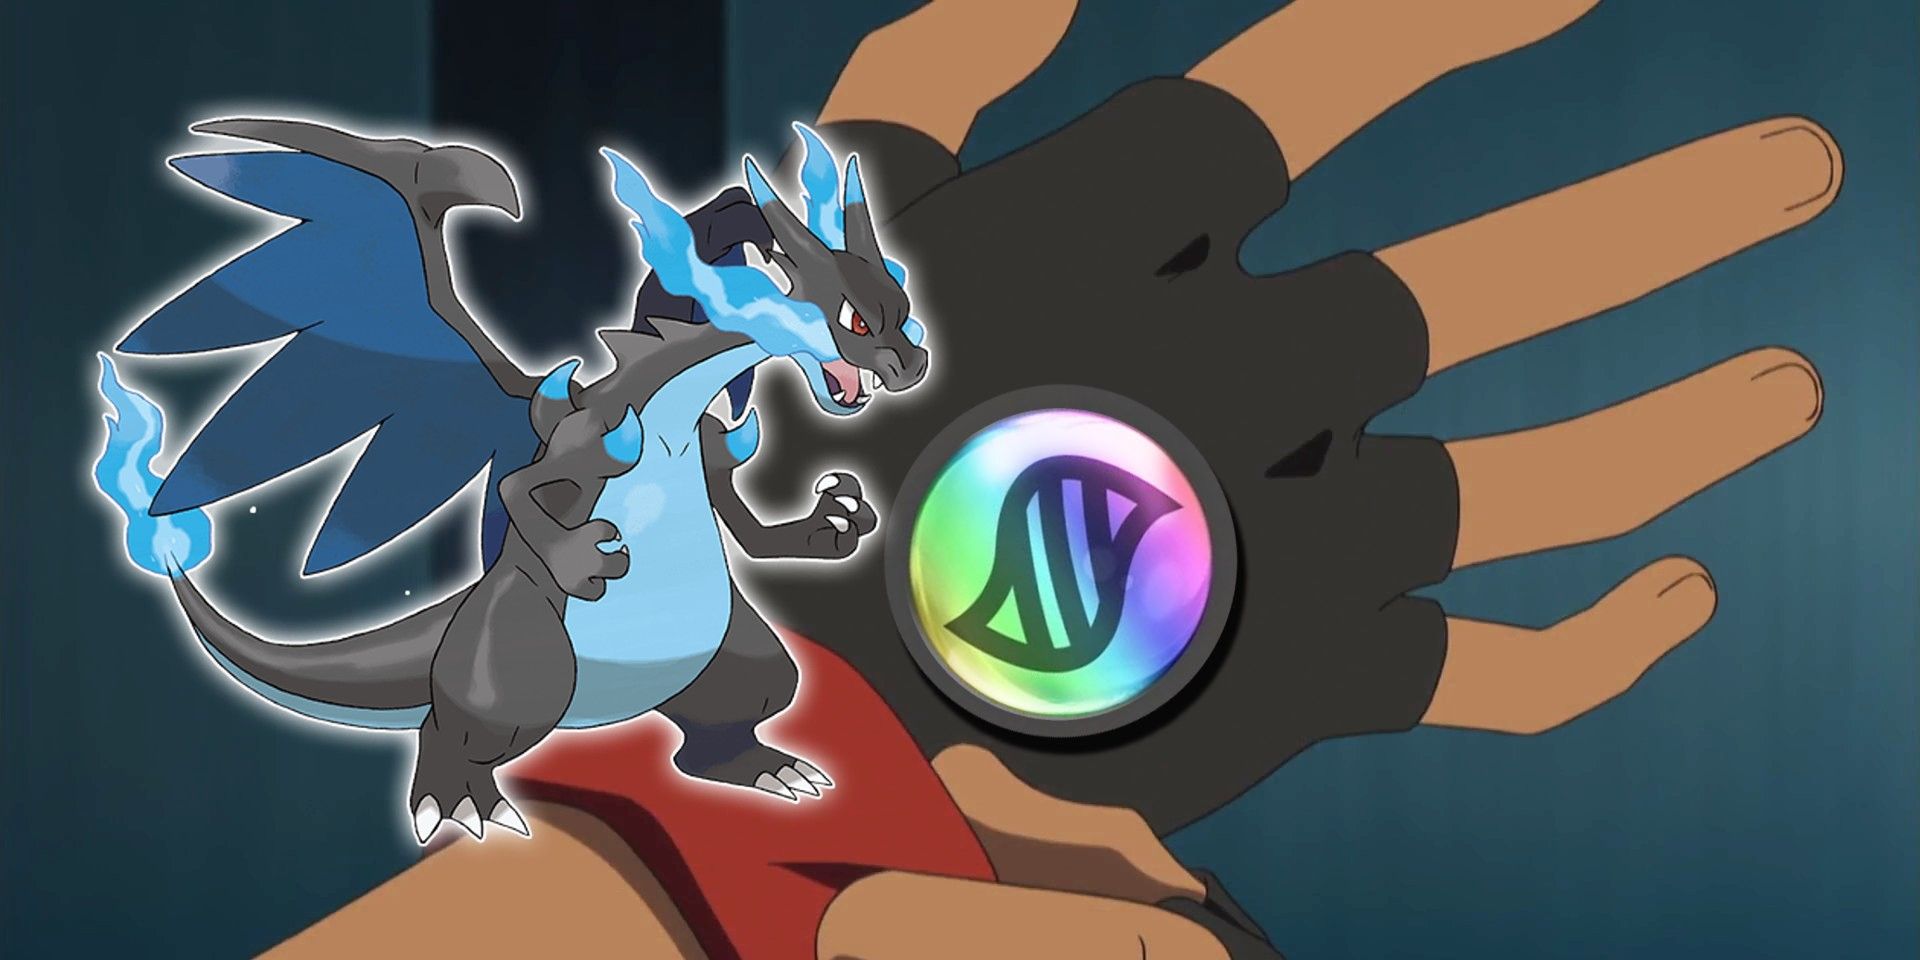 Pokémon: Why Mega Charizard X Has Blue Flames